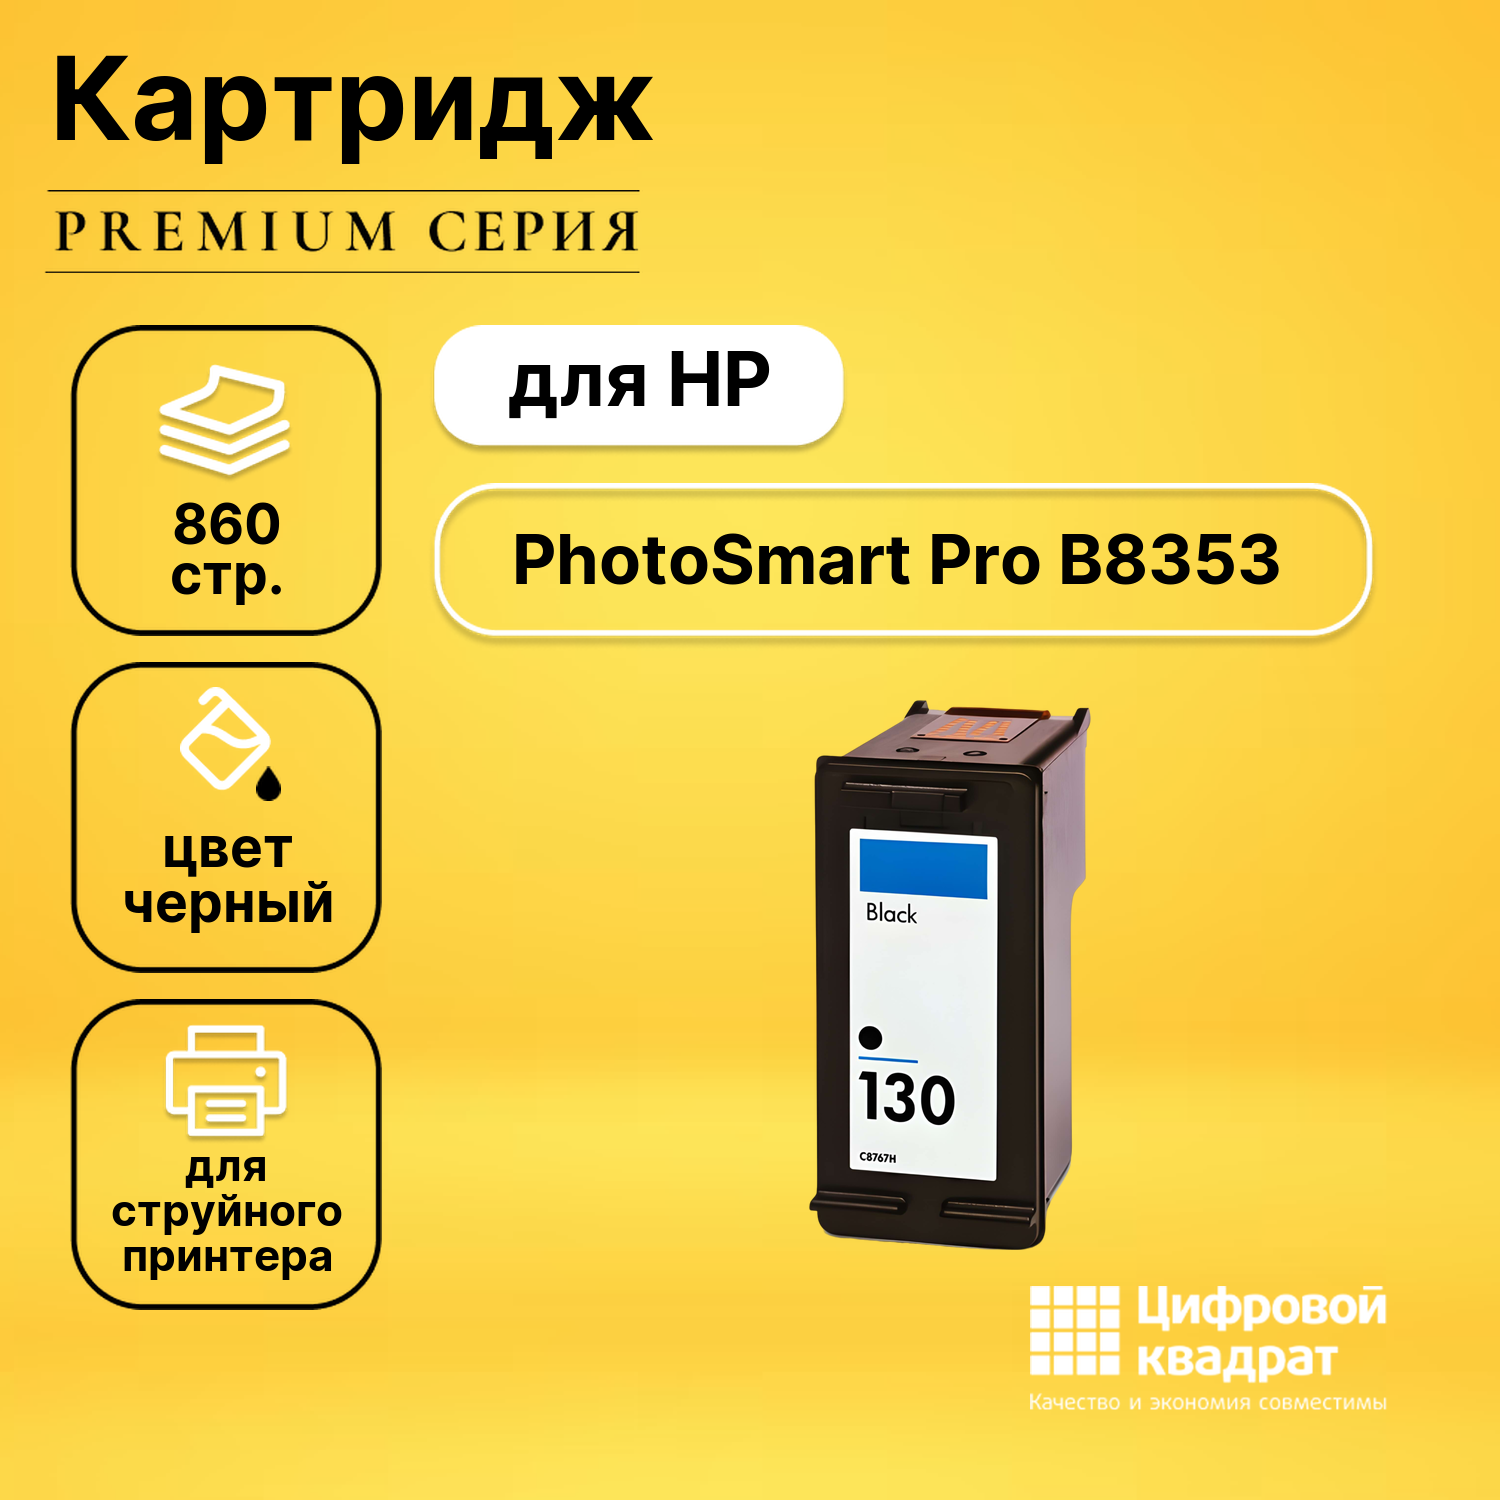 Картридж DS для HP PhotoSmart Pro B8353 совместимый